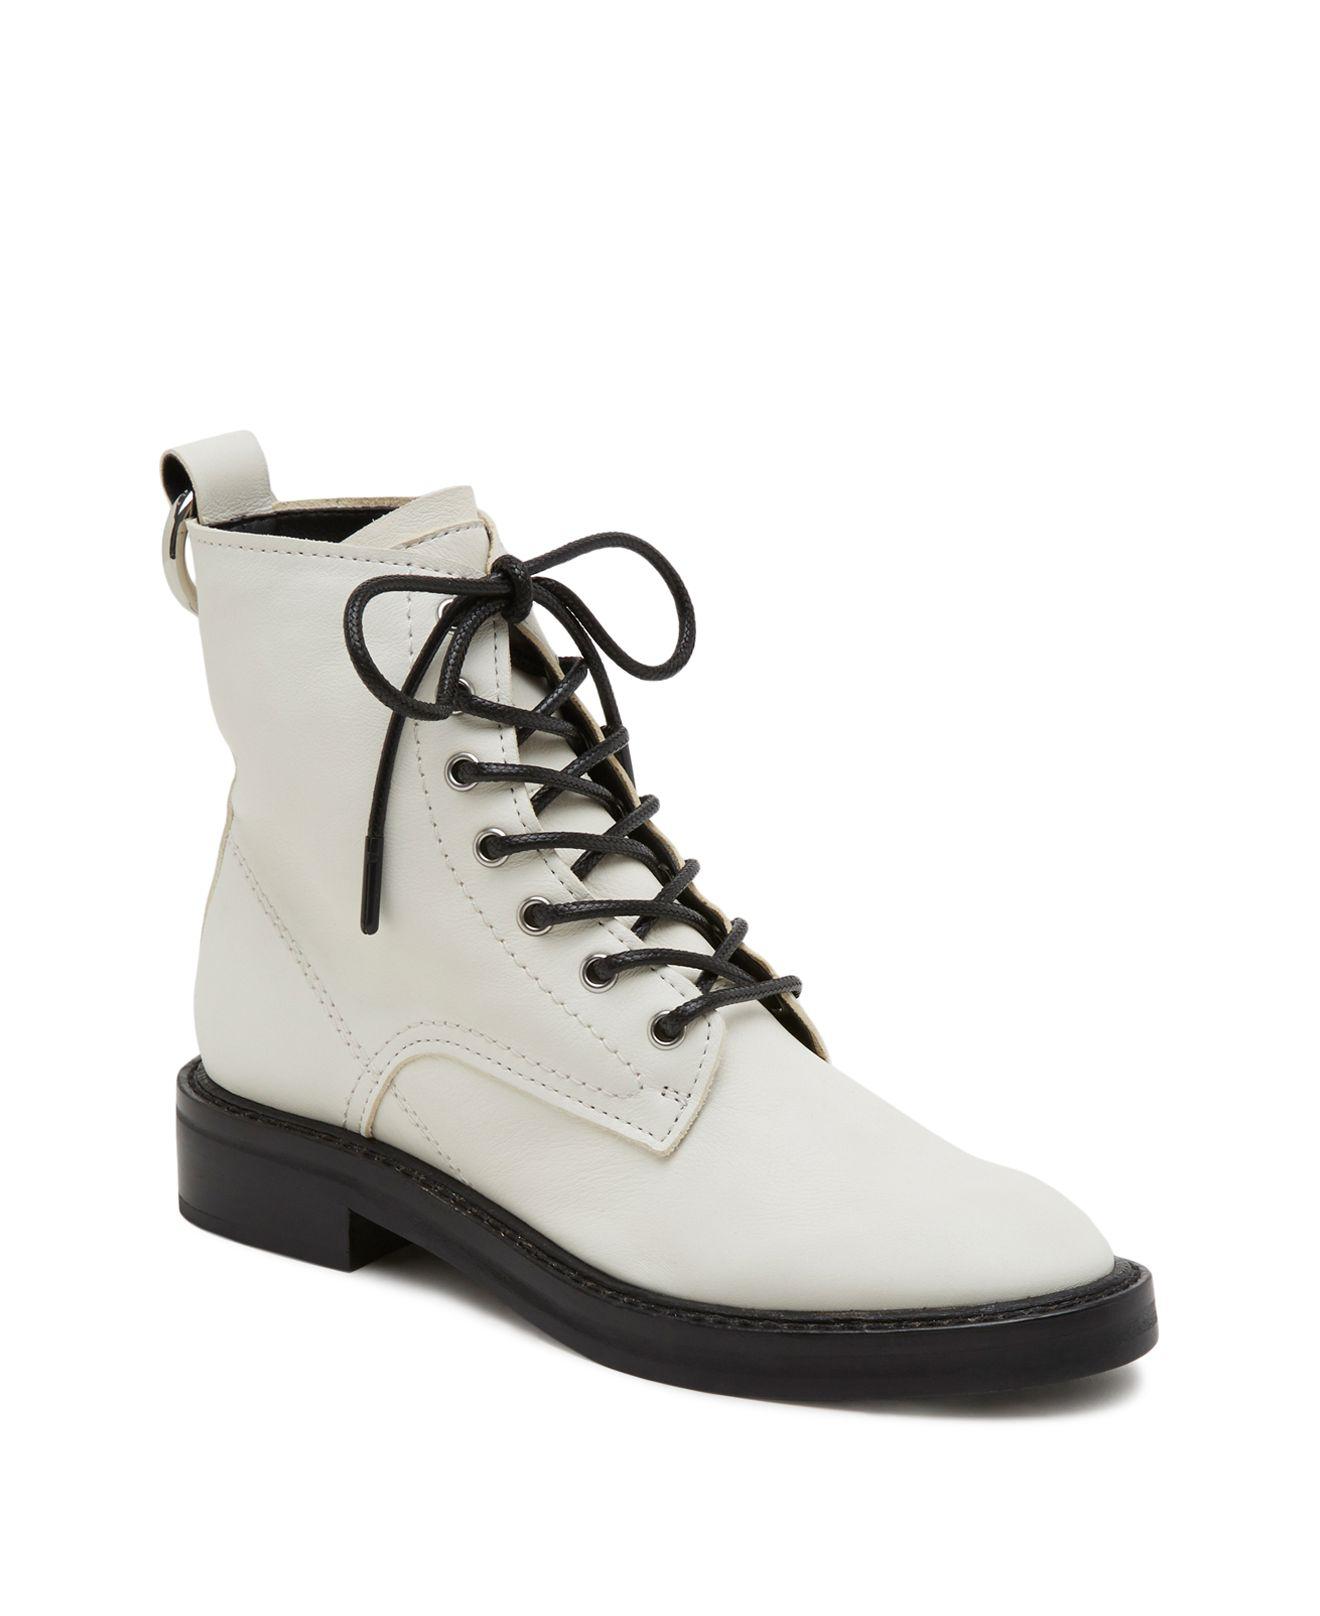 dolce vita white combat boots